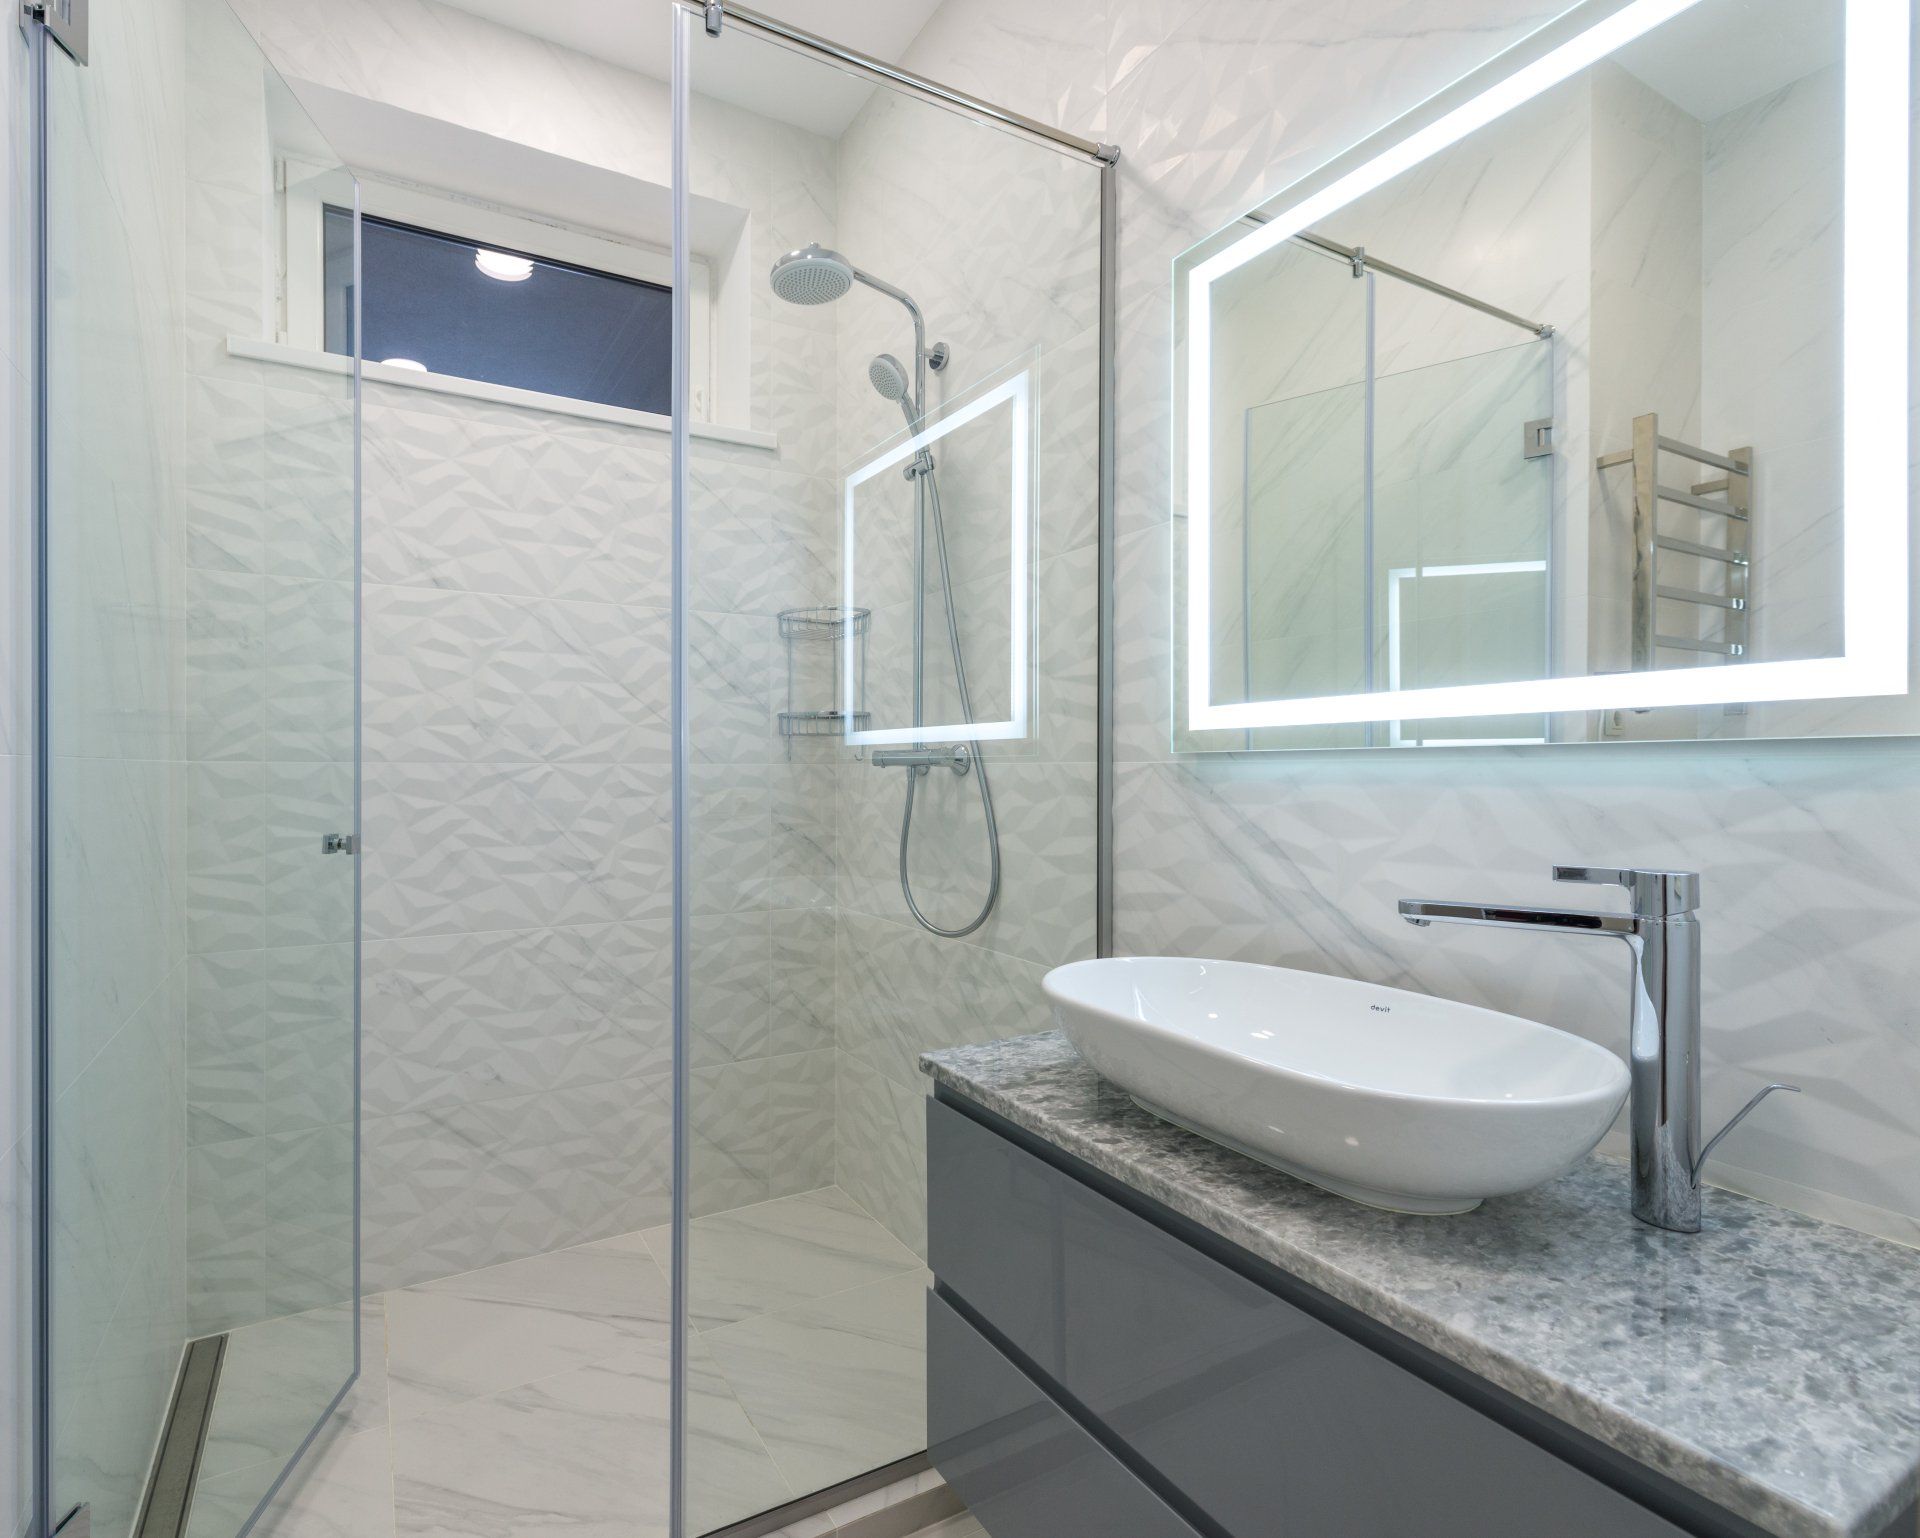 Bright, simple bathroom featuring geometric tile work.